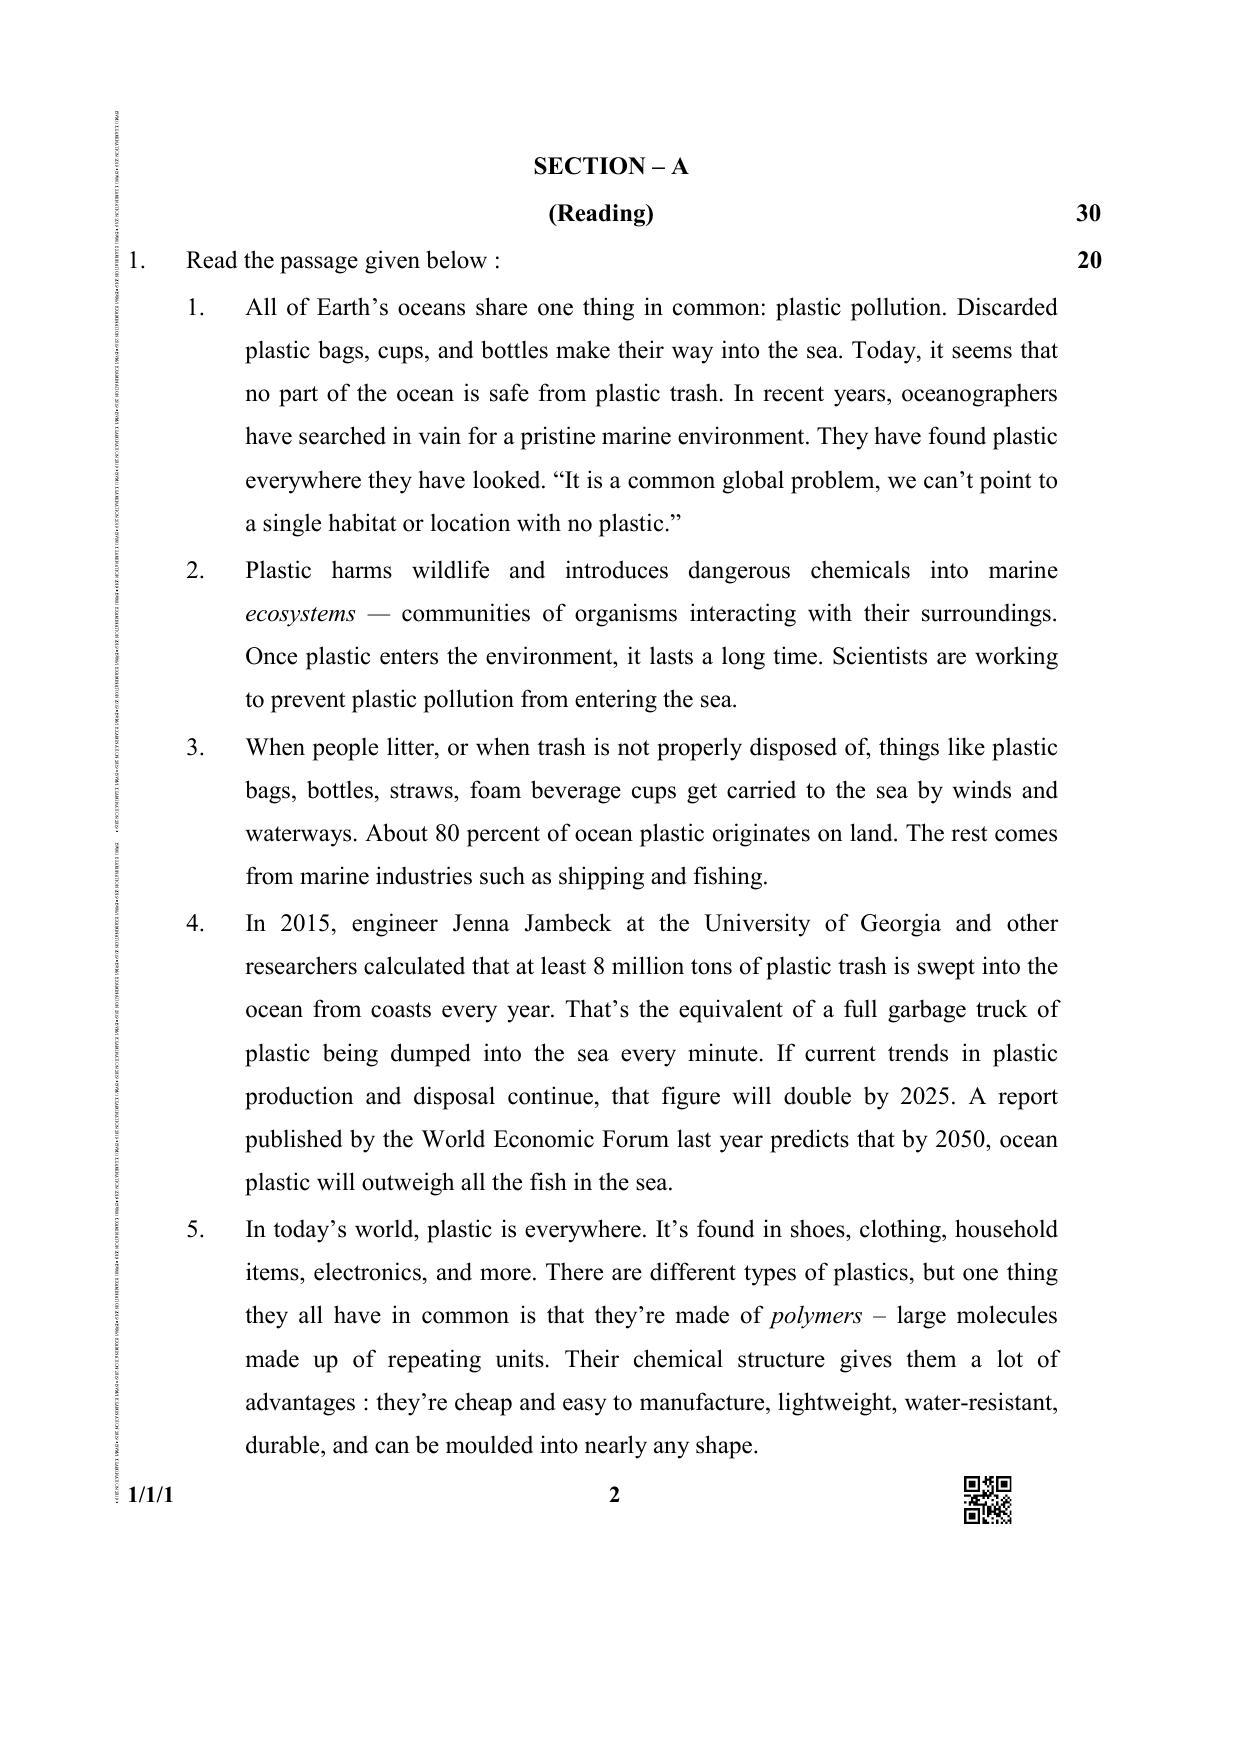 CBSE Class 12 1-1-1 (English Core) 2019 Question Paper - Page 2